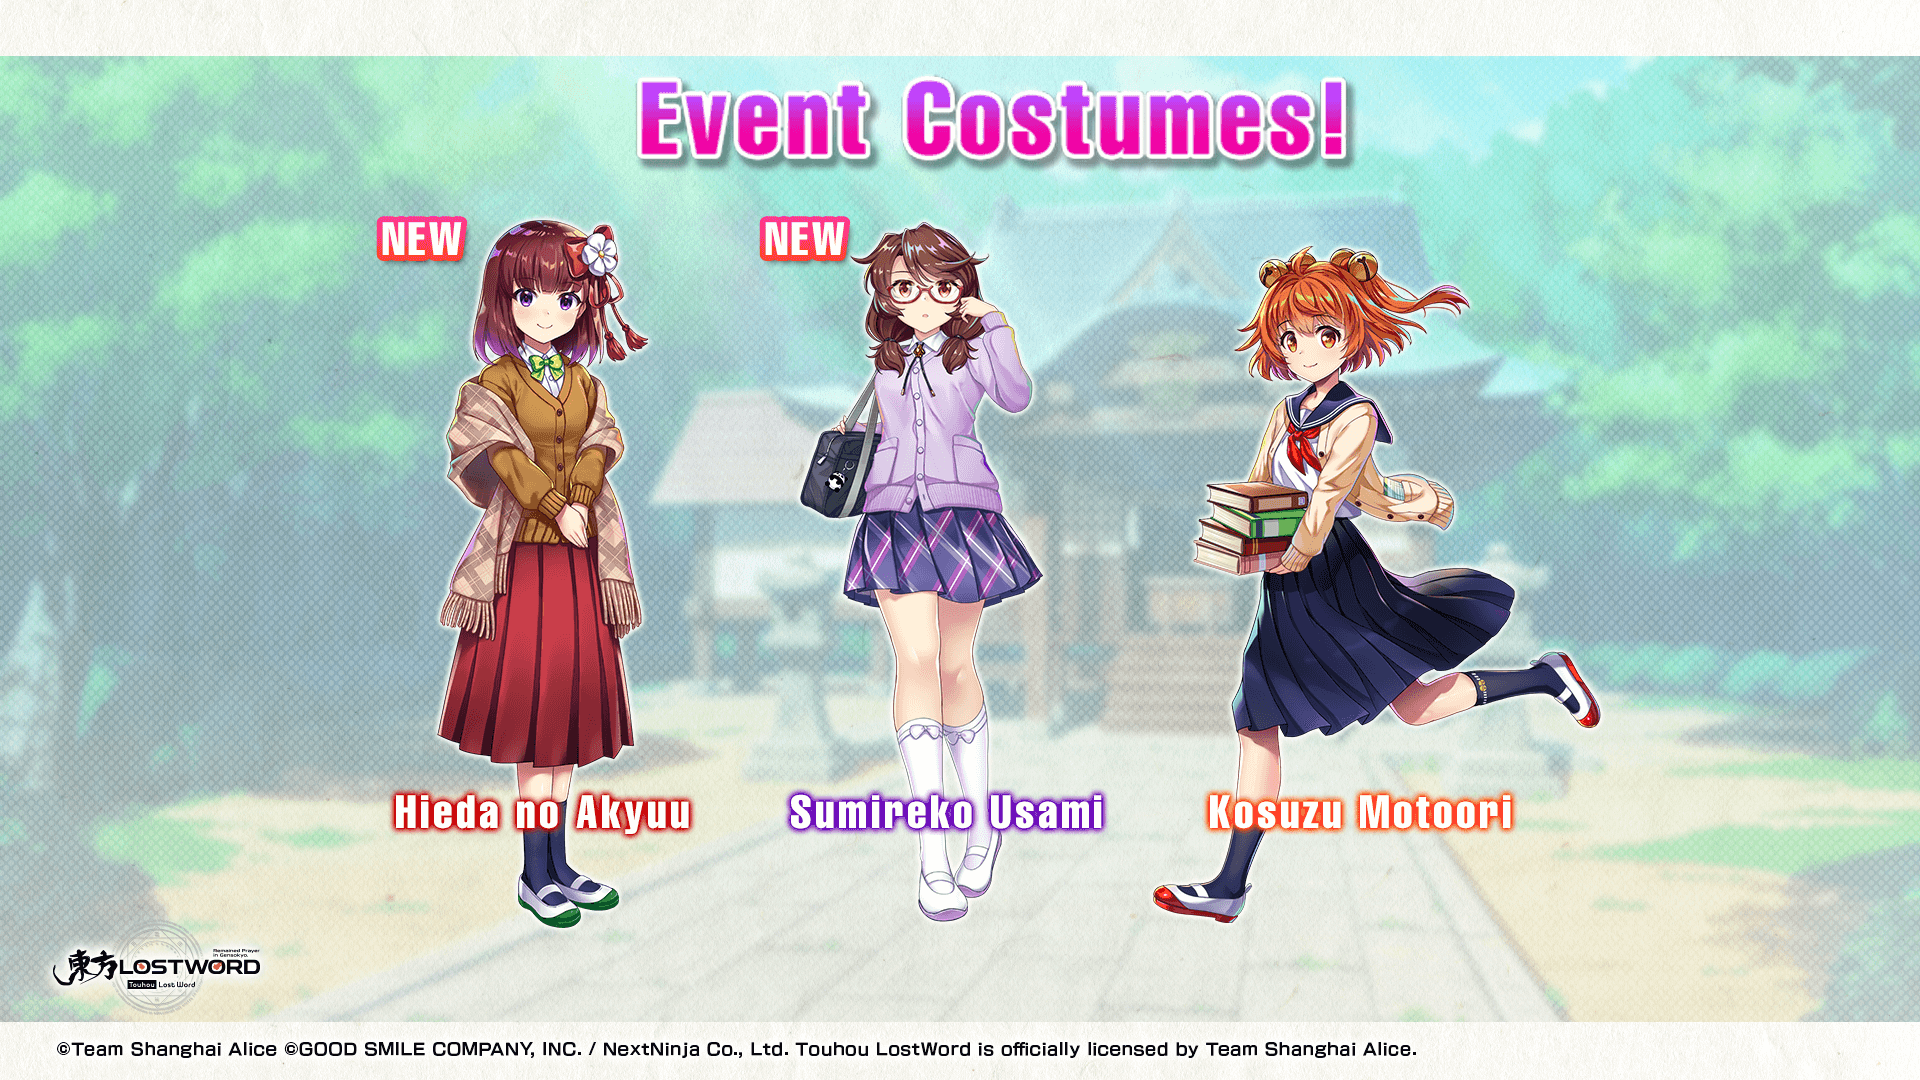 New event costumes for Akyuu and Sumireko, along with Kosuzu's matching, existing costume.